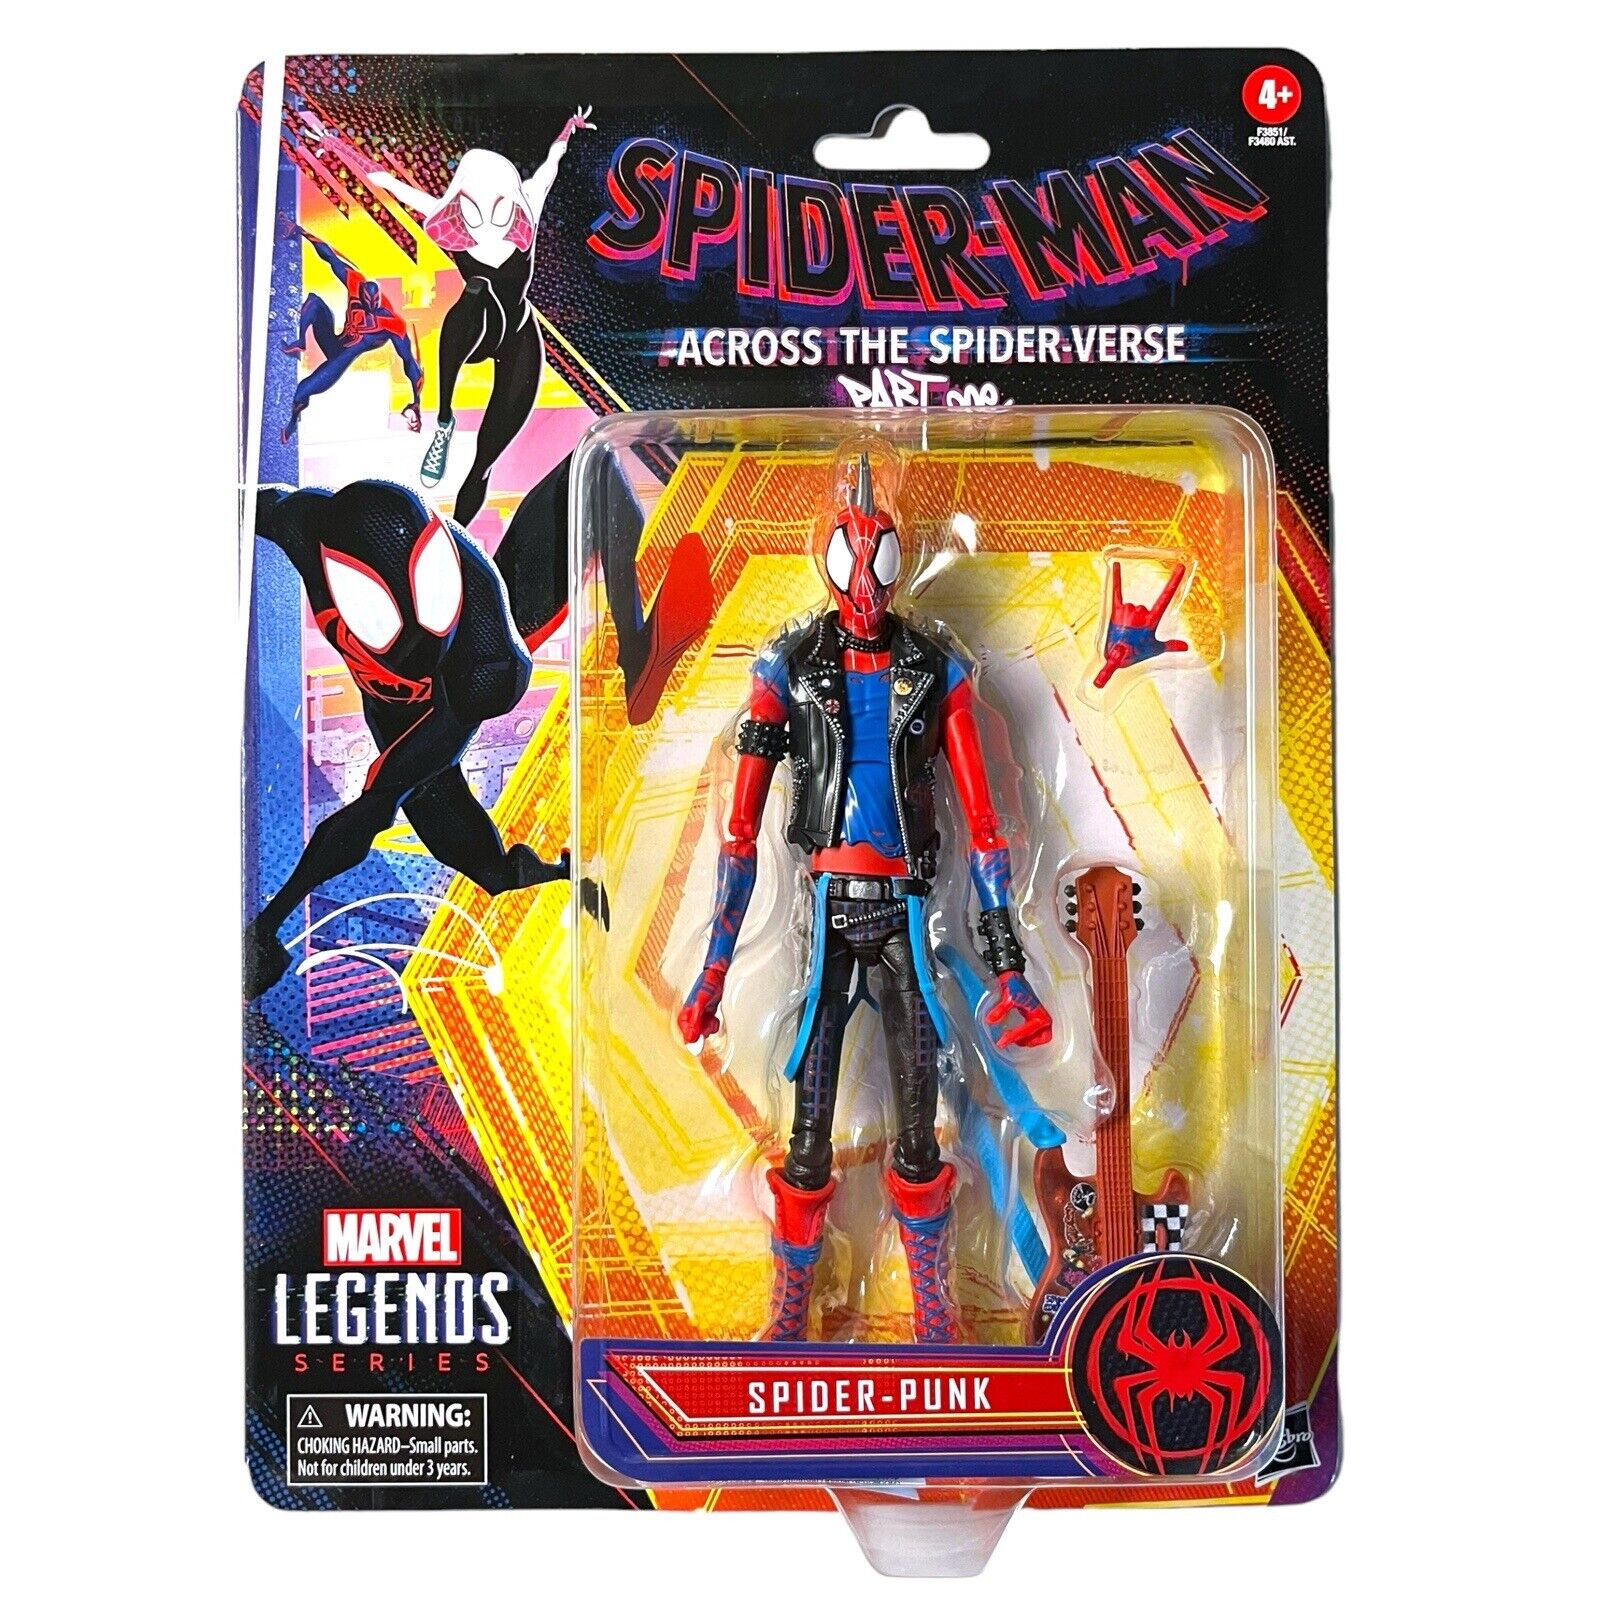 Marvel Legends Spider Punk Spiderman Across the Spider-verse 6” Figure New Fast Hasbro